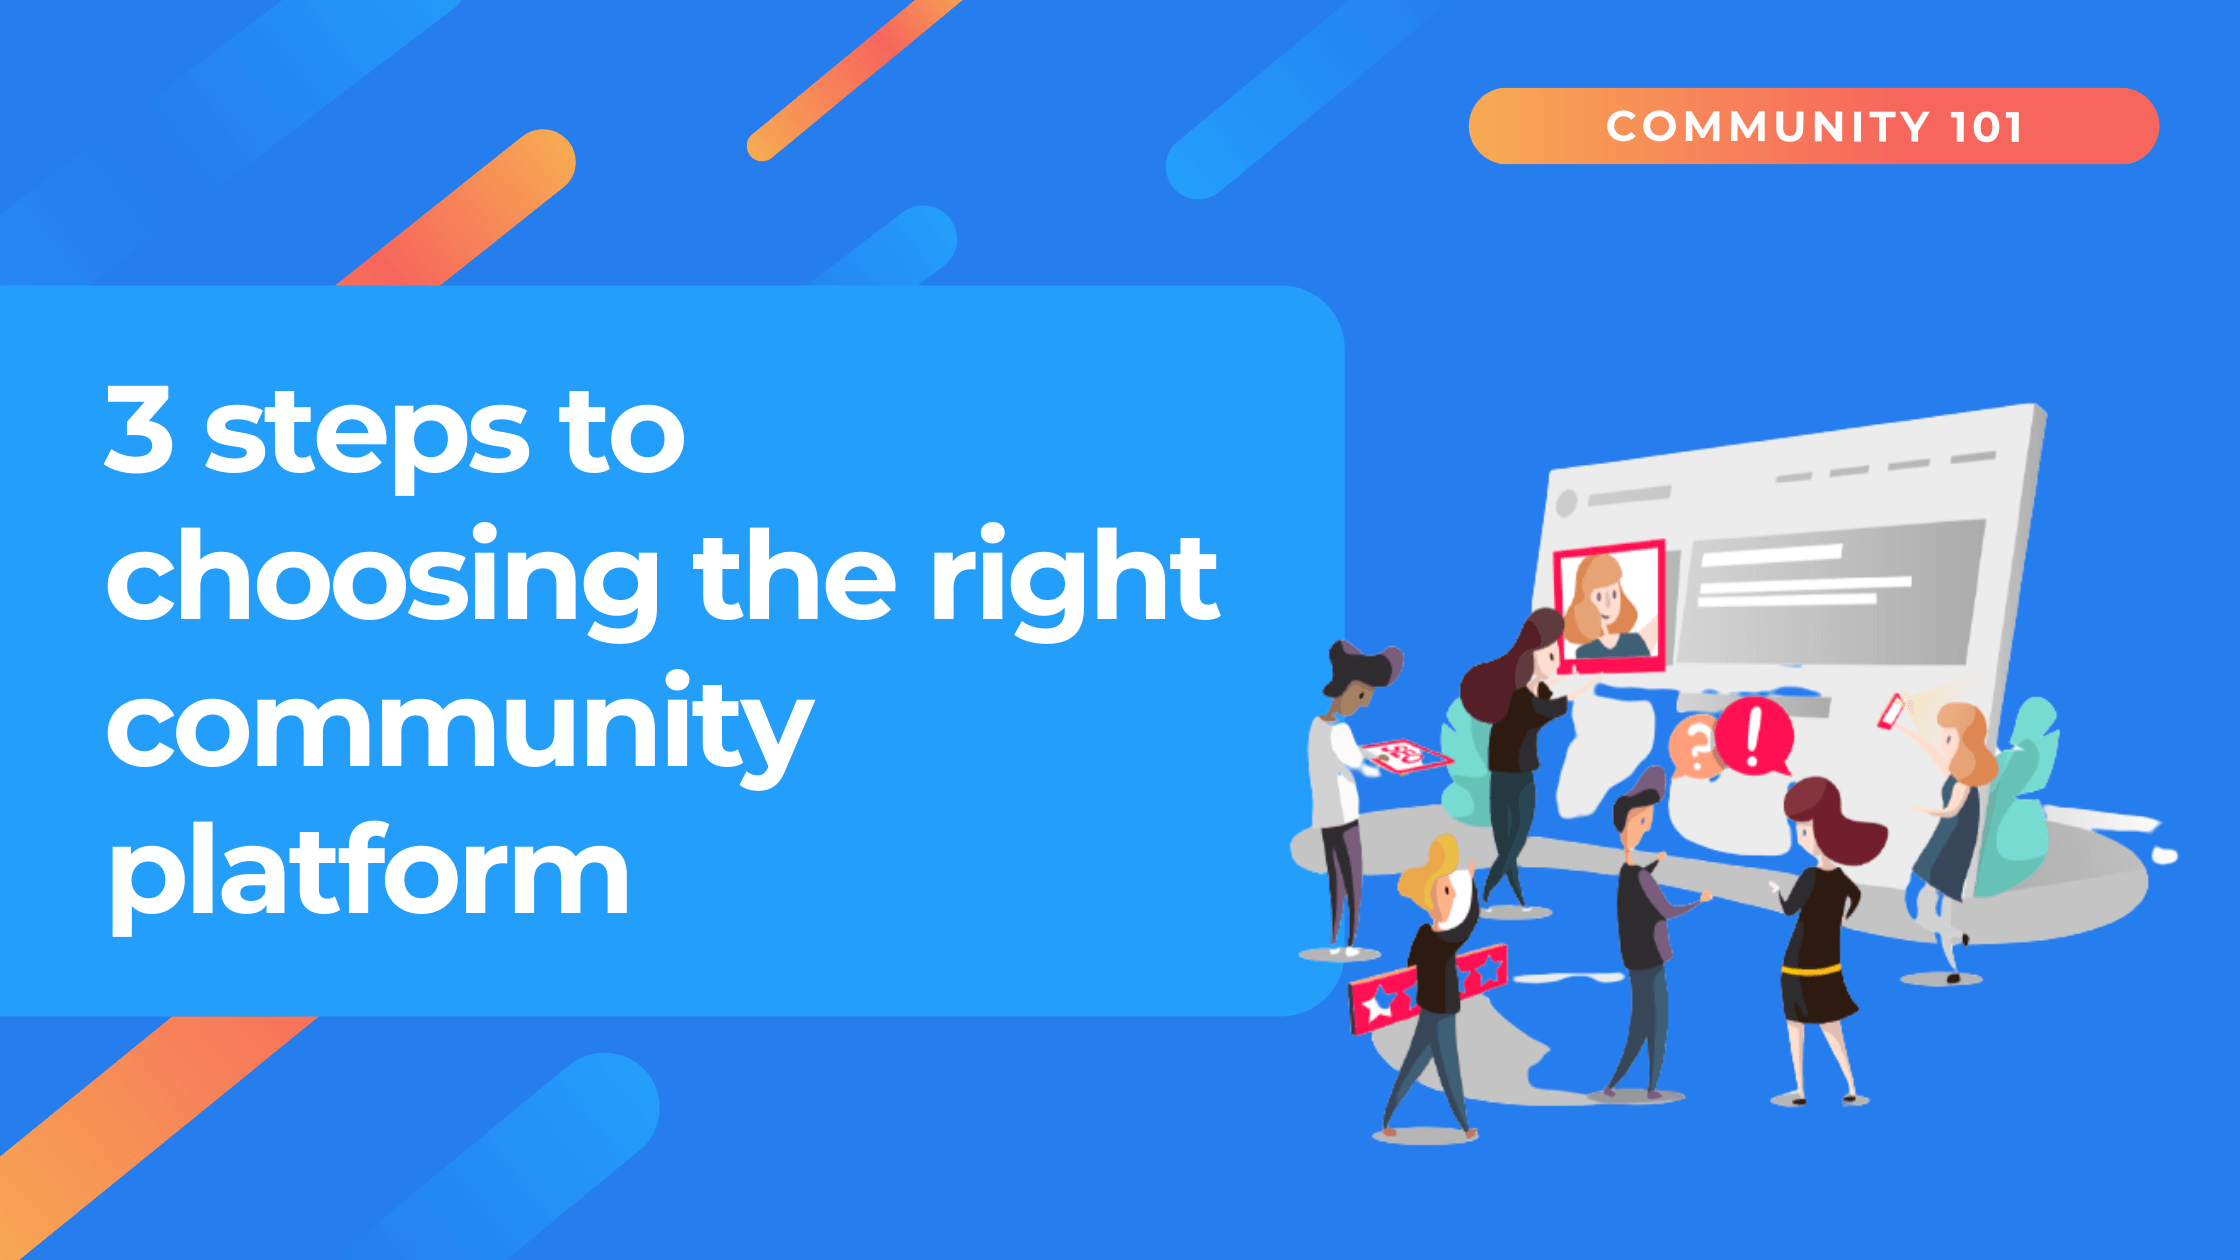 Community building 101 - choosing the right platform